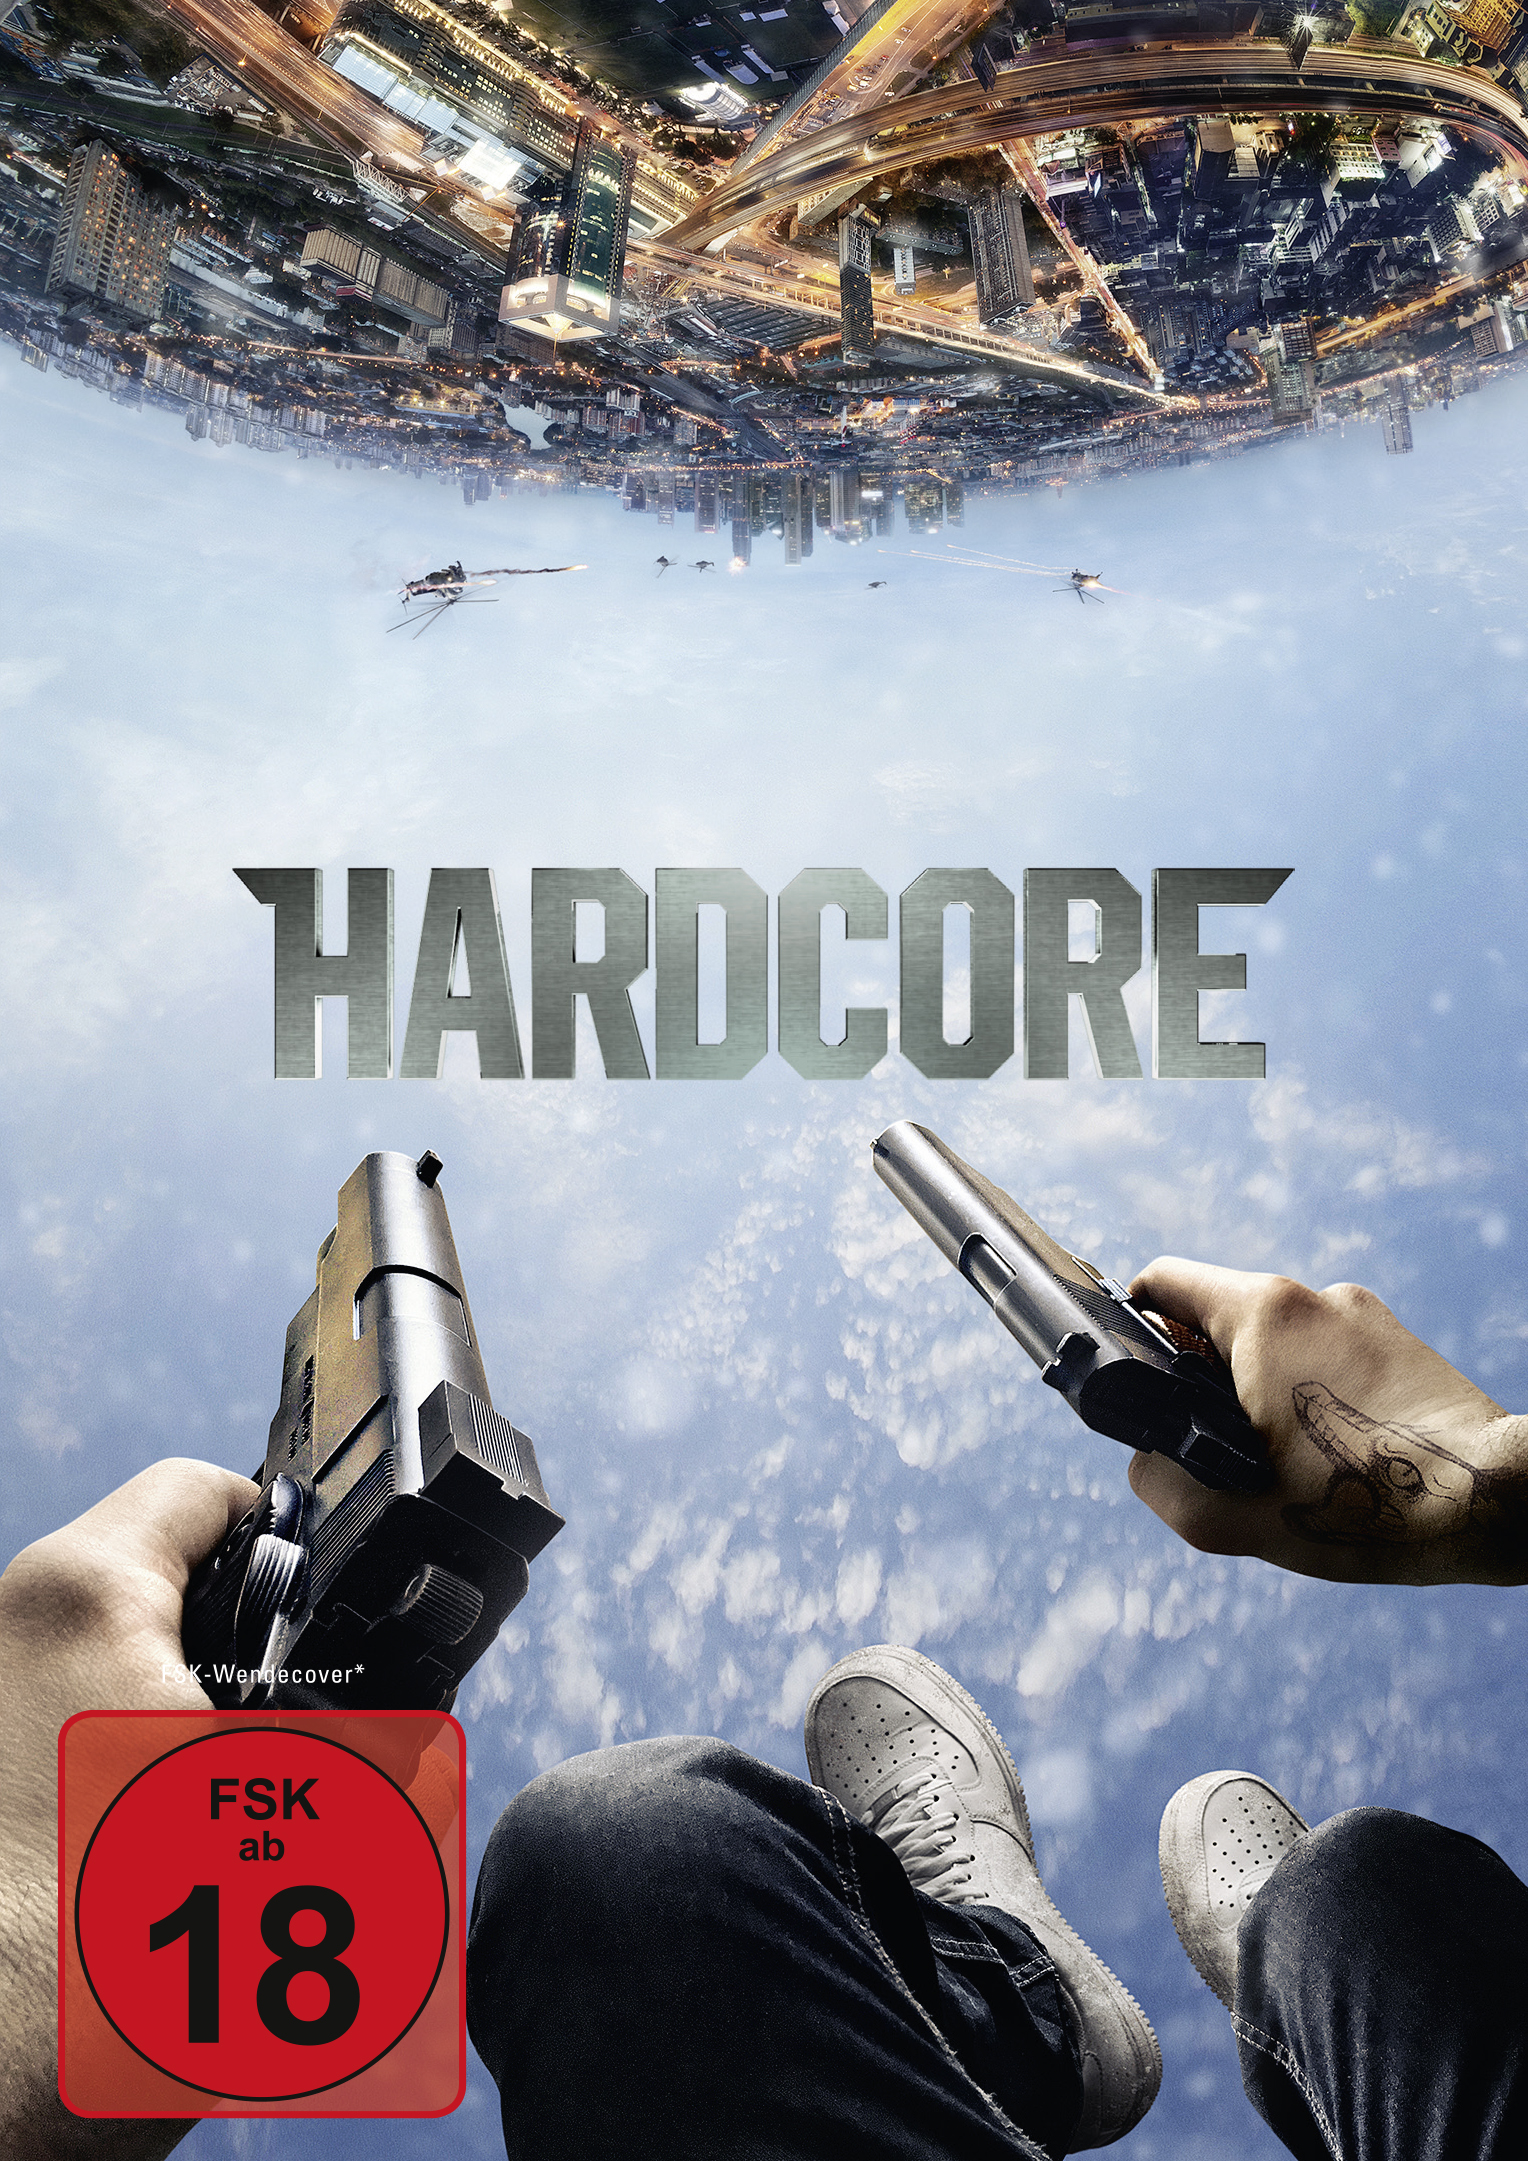 DVD Hardcore